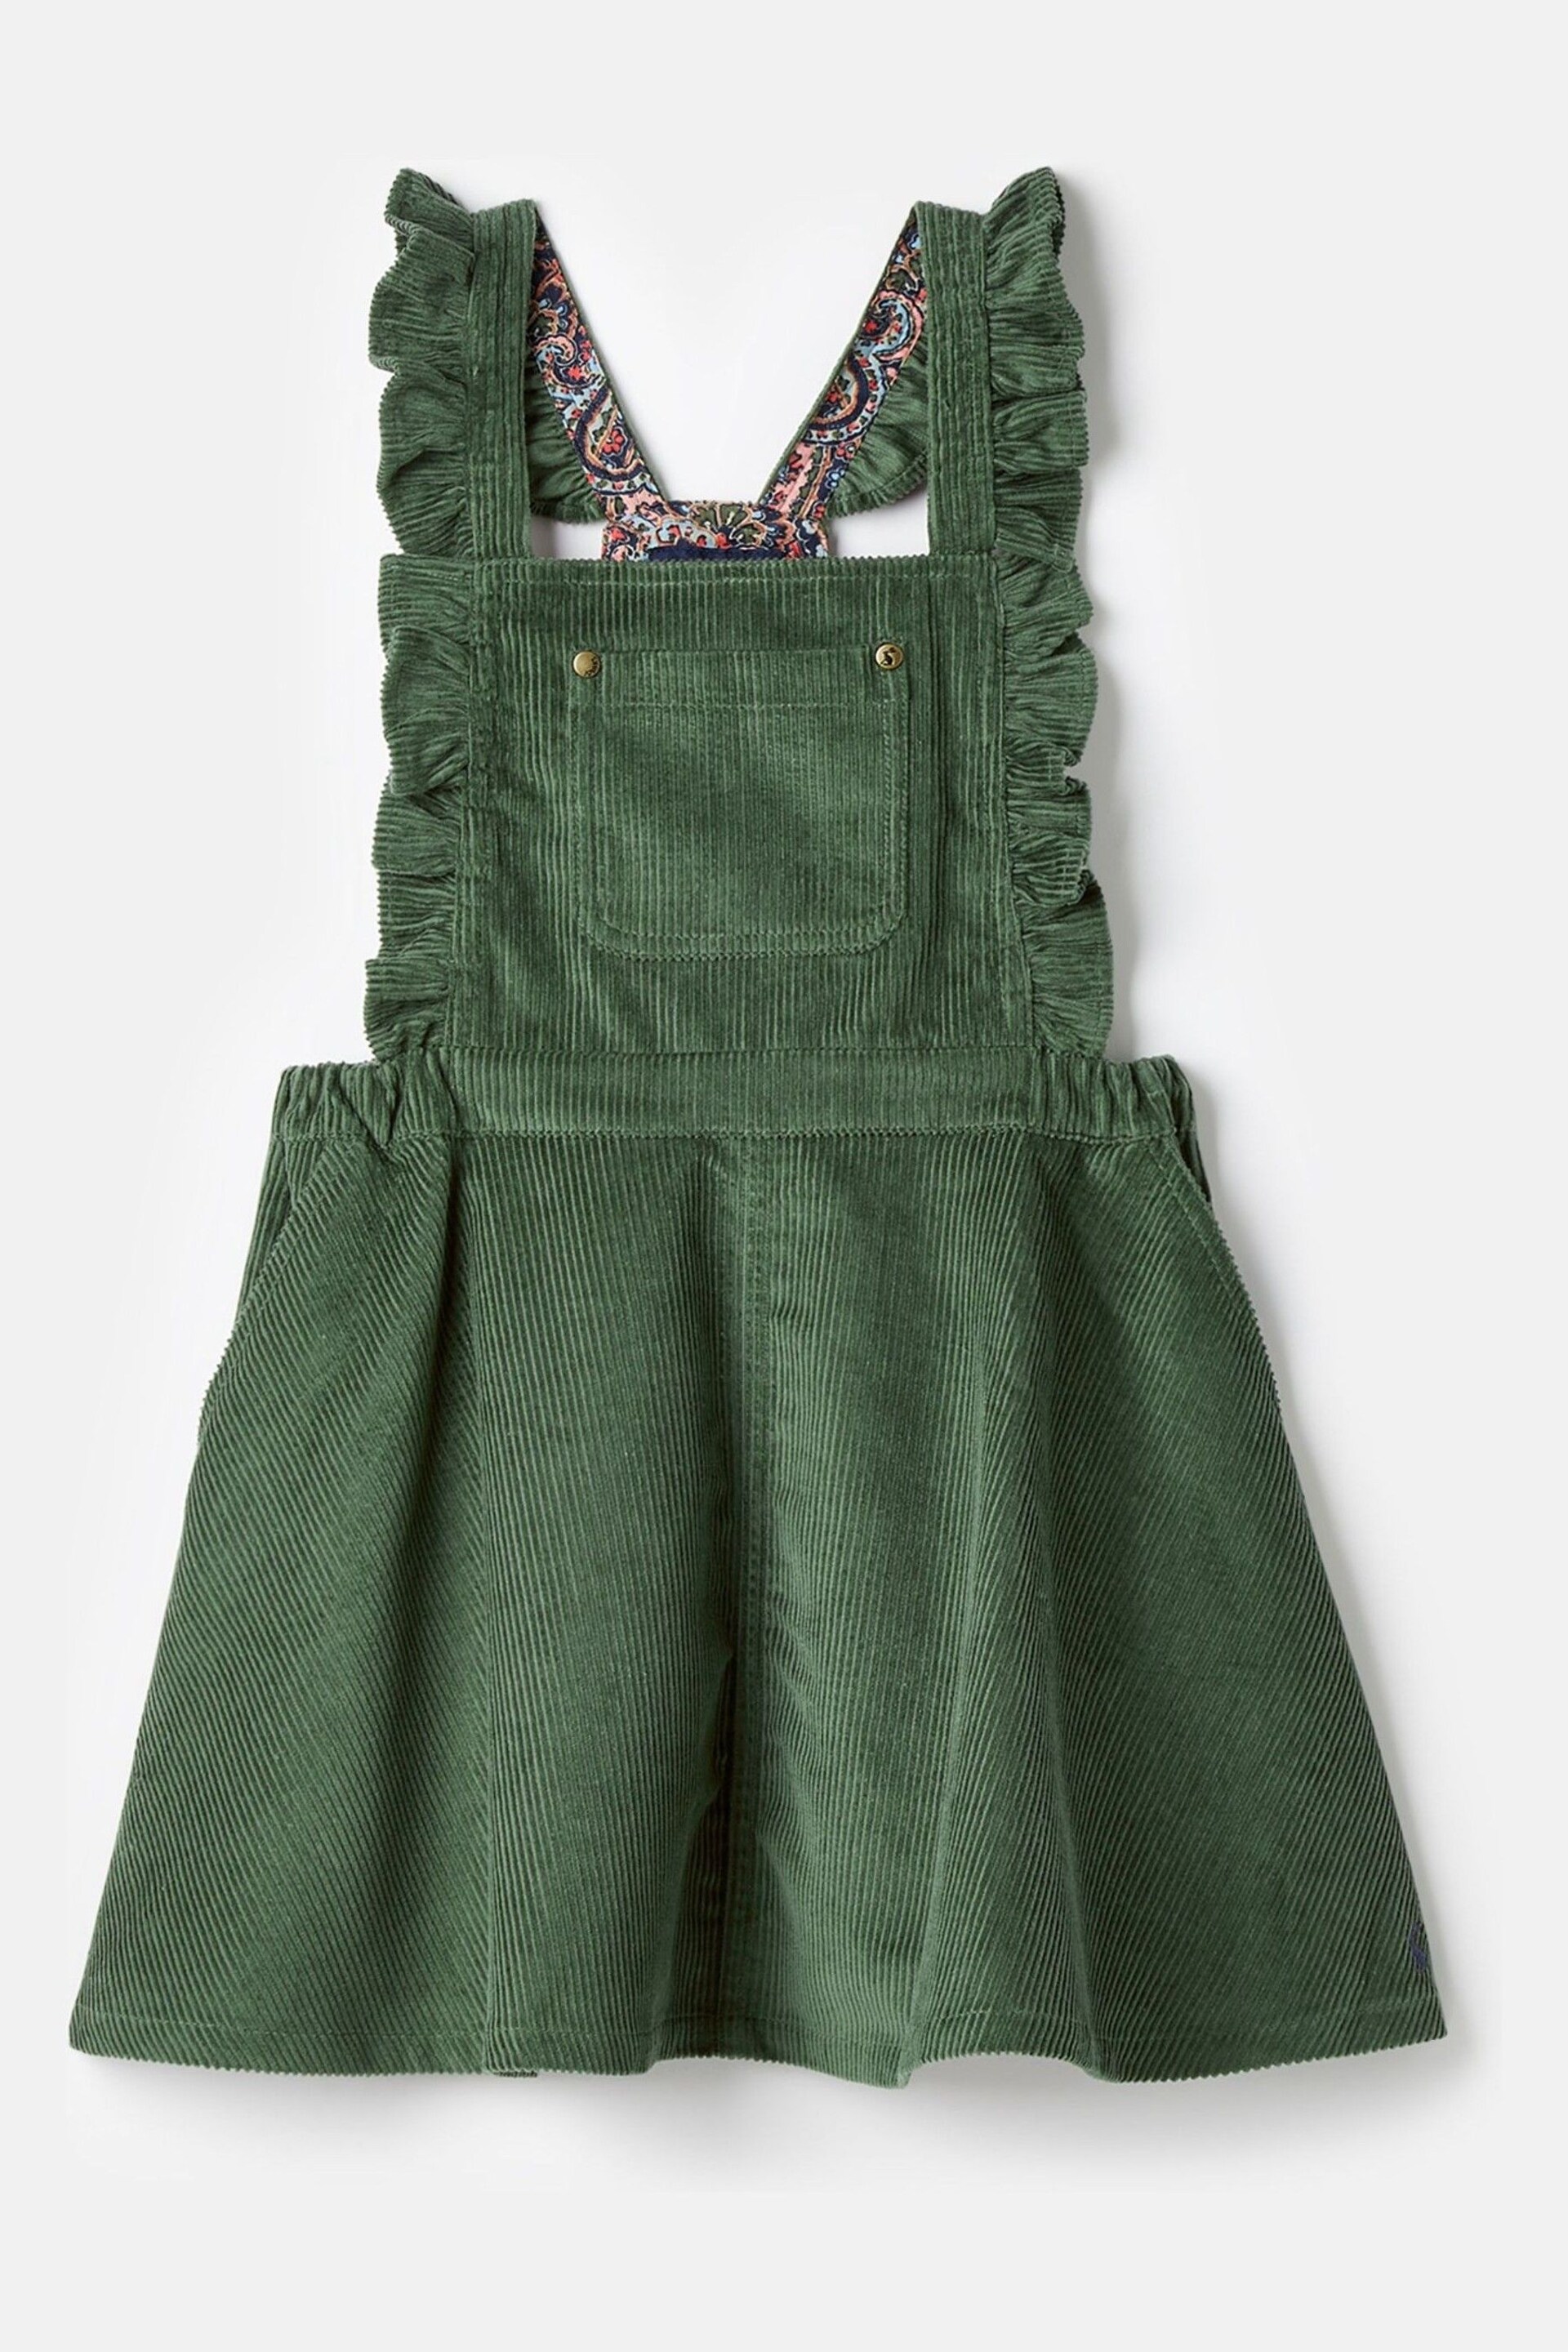 Joules Adaline Green Corduroy Pinafore Dress - Image 1 of 5